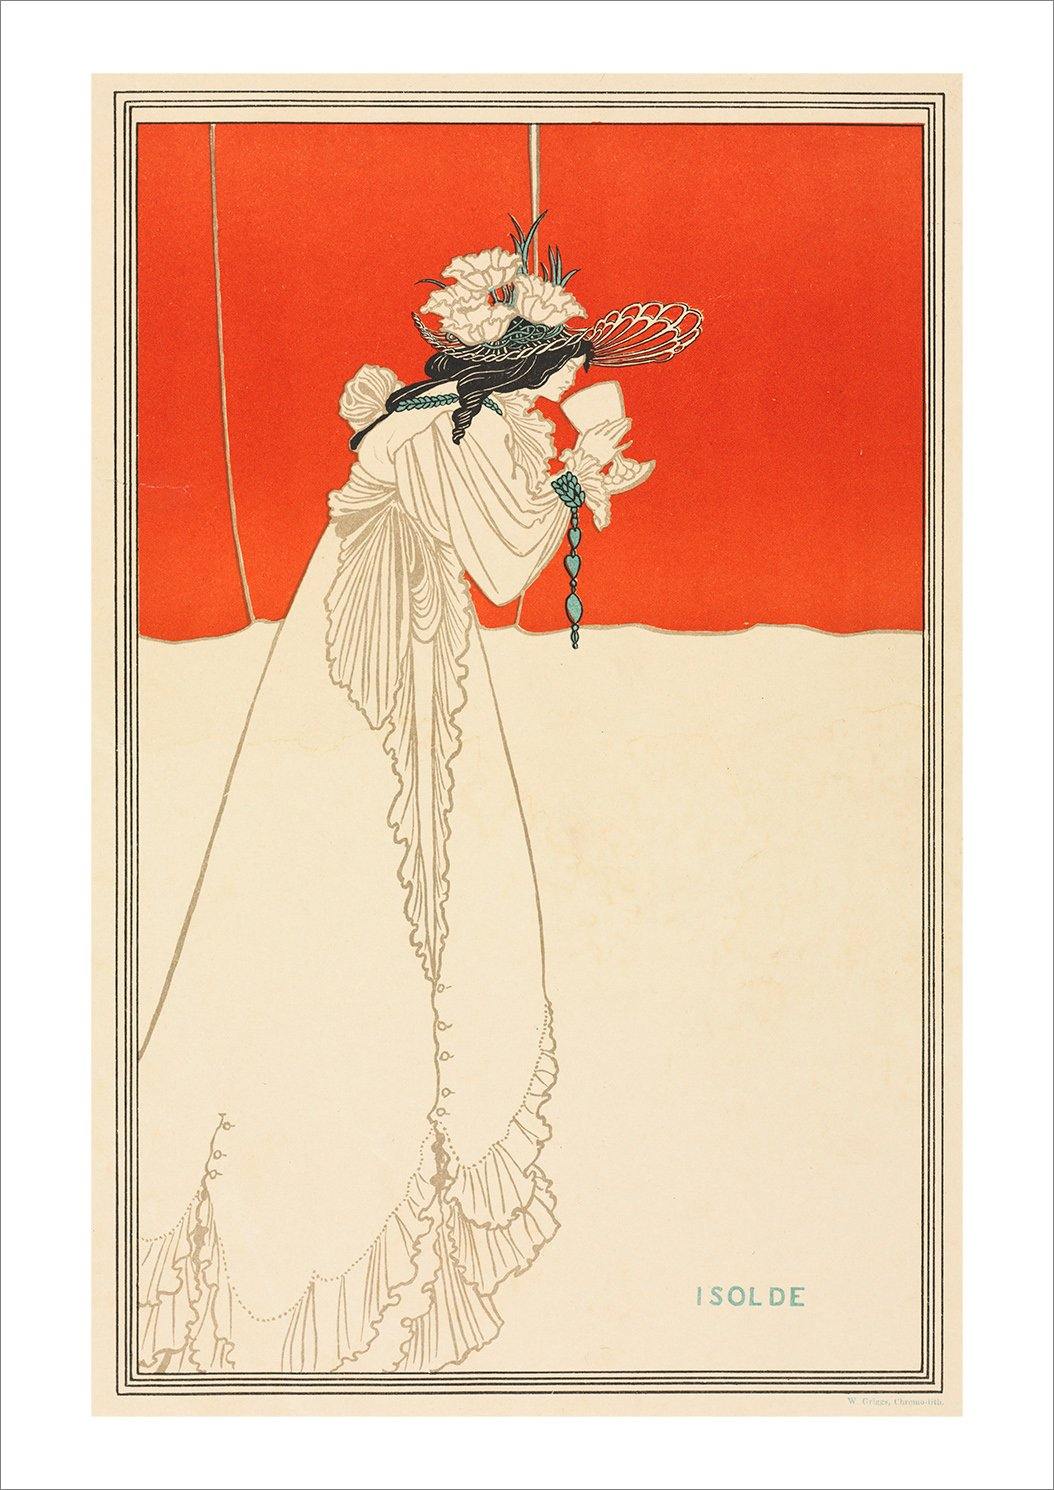 AUBREY BEARDSLEY: Isolde Illustration Art Print - Pimlico Prints